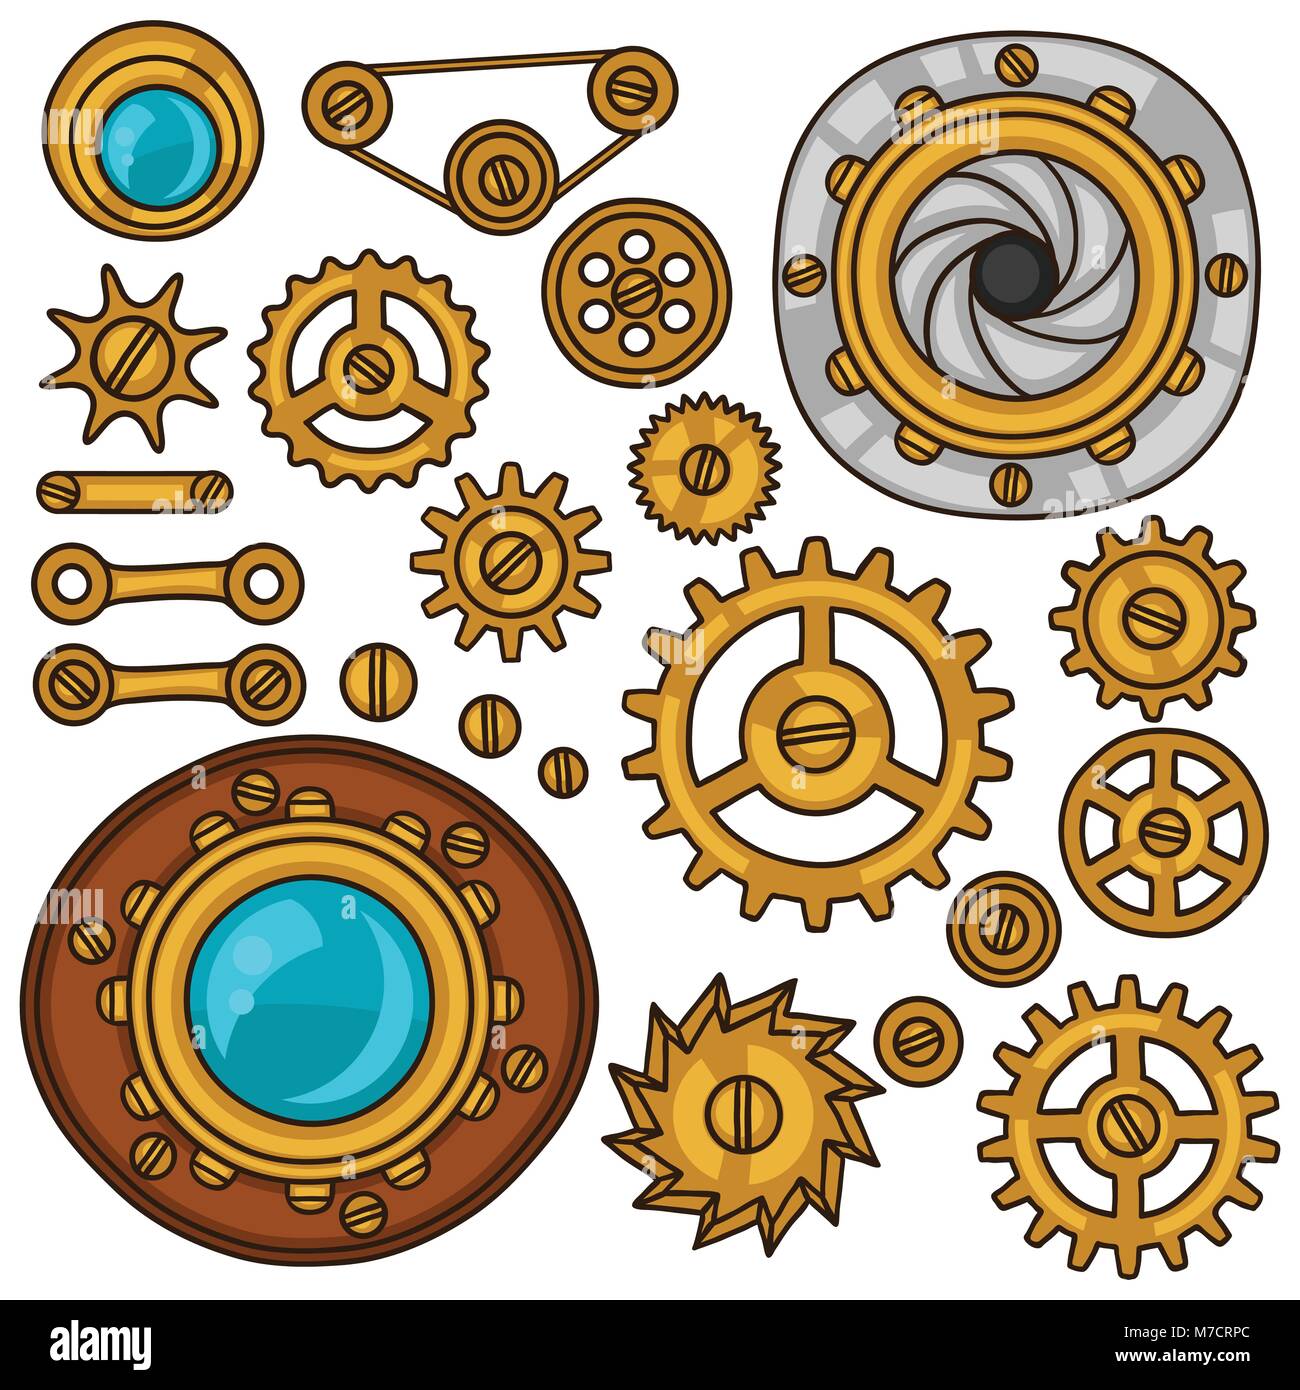 https://c8.alamy.com/comp/M7CRPC/set-of-steampunk-gears-screws-and-cogwheels-in-doodle-style-M7CRPC.jpg